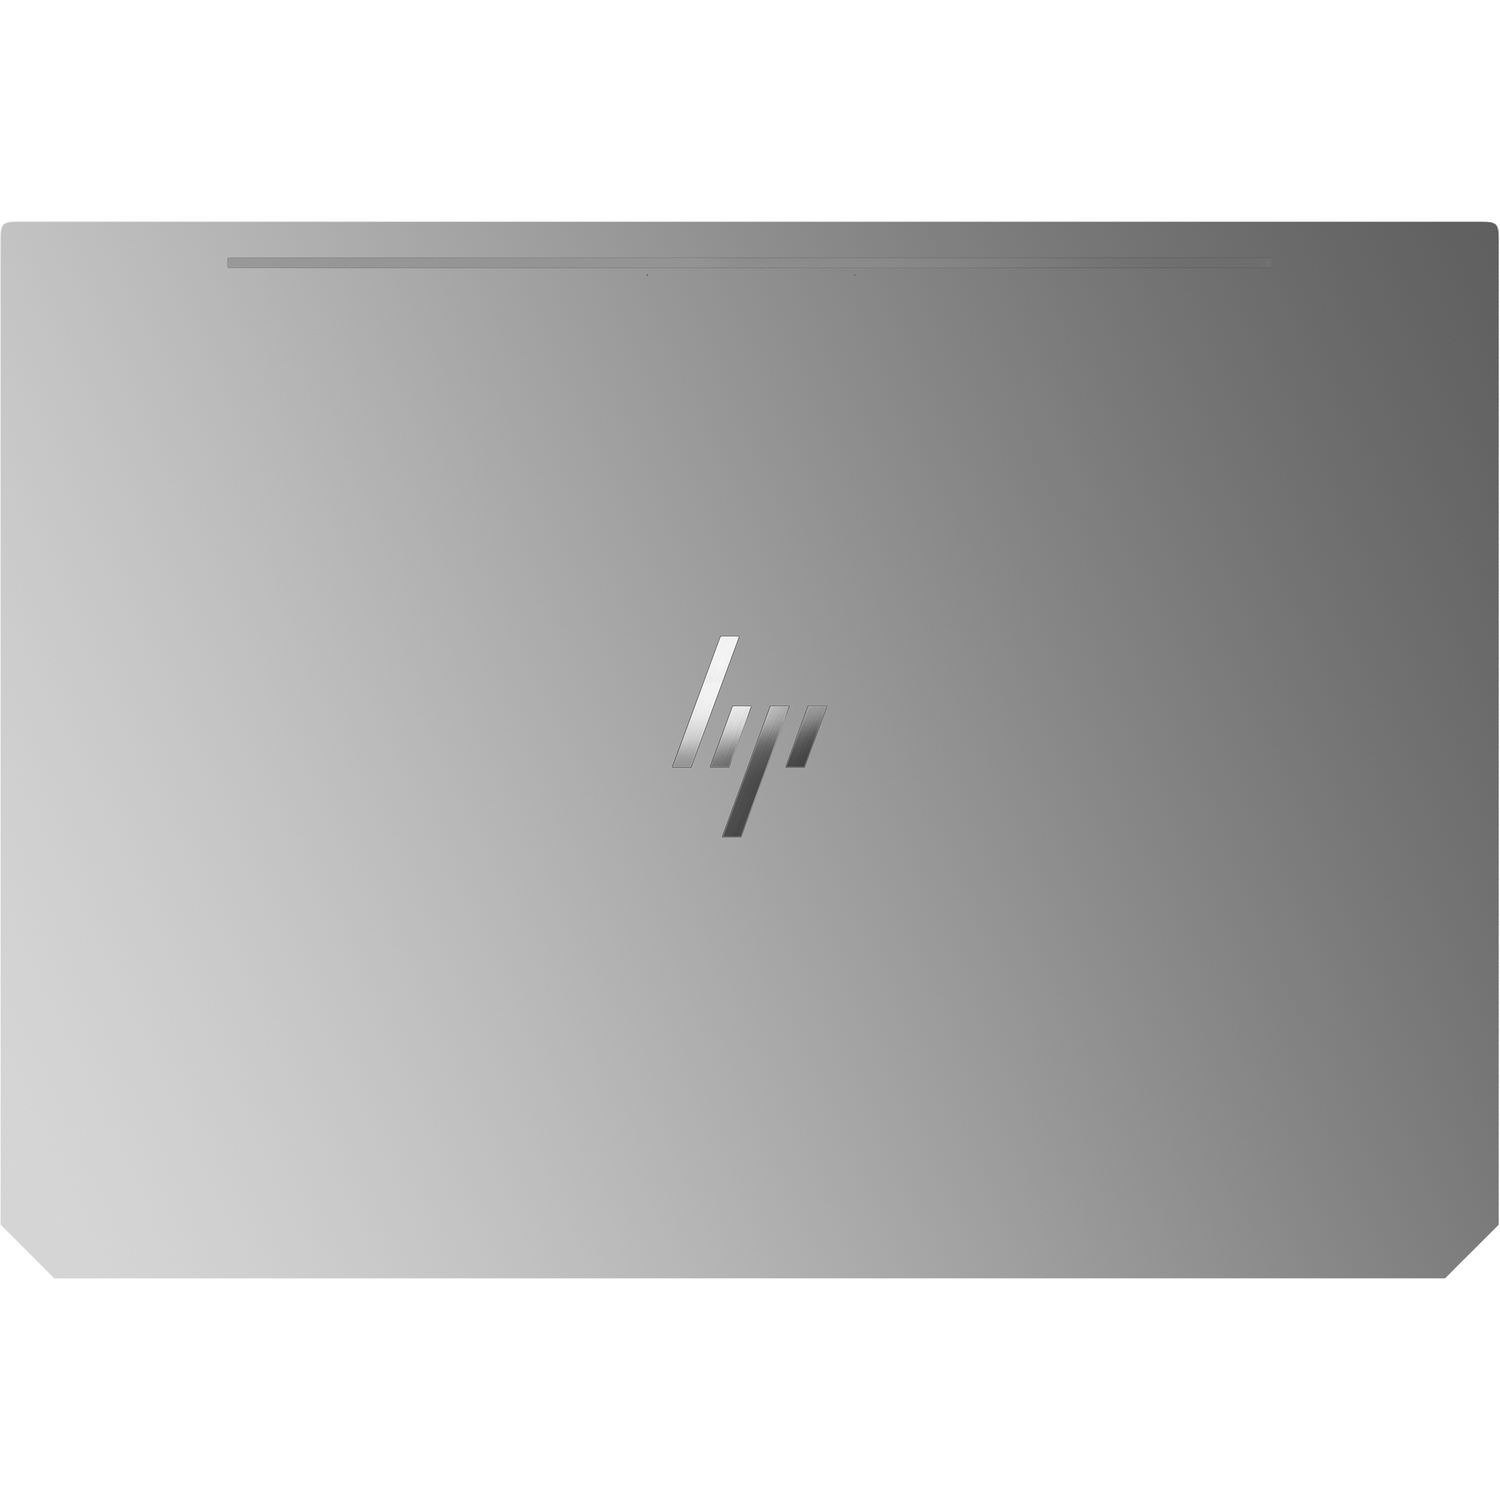 HP ZBook Studio G5 15.6" LCD Mobile Workstation - Intel Xeon E-2176M Hexa-core (6 Core) 2.7GHz - 16GB DDR4 SDRAM - 512GB SSD - Windows 10 Pro - image 5 of 5